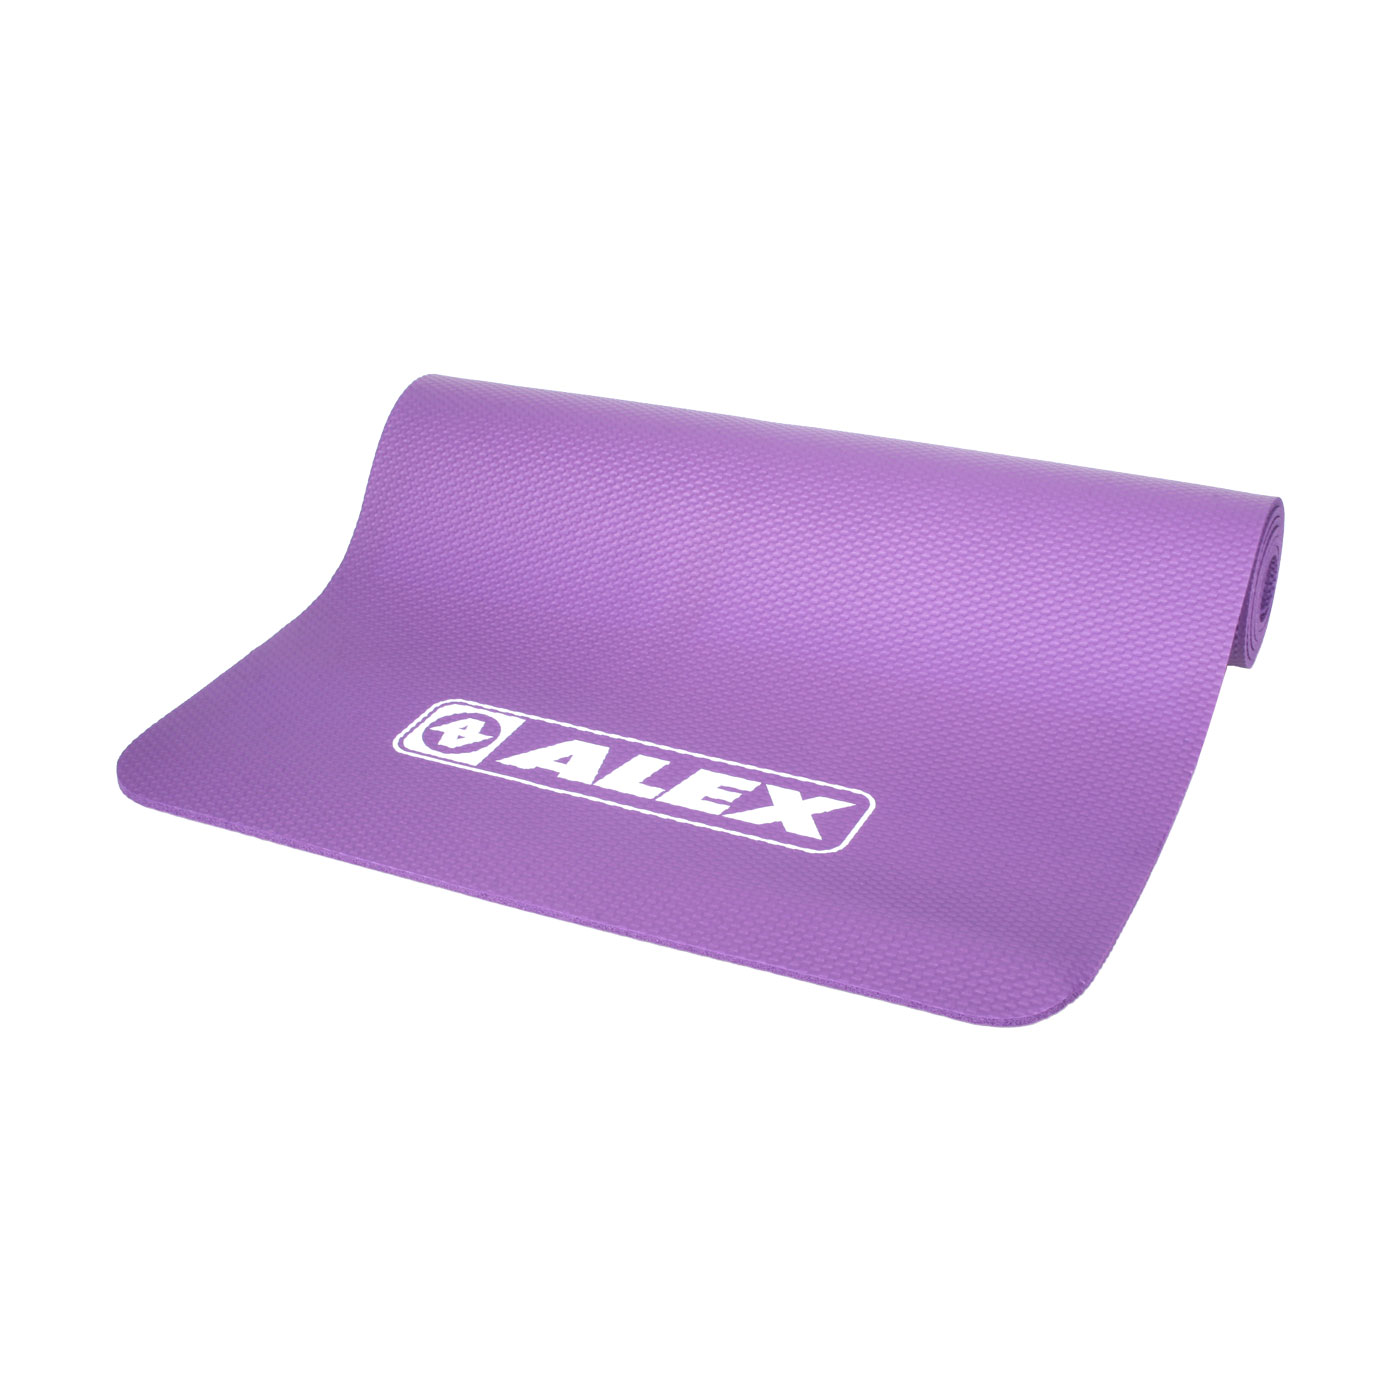 ALEX 專業瑜珈墊 C-1812-1 - 紫白